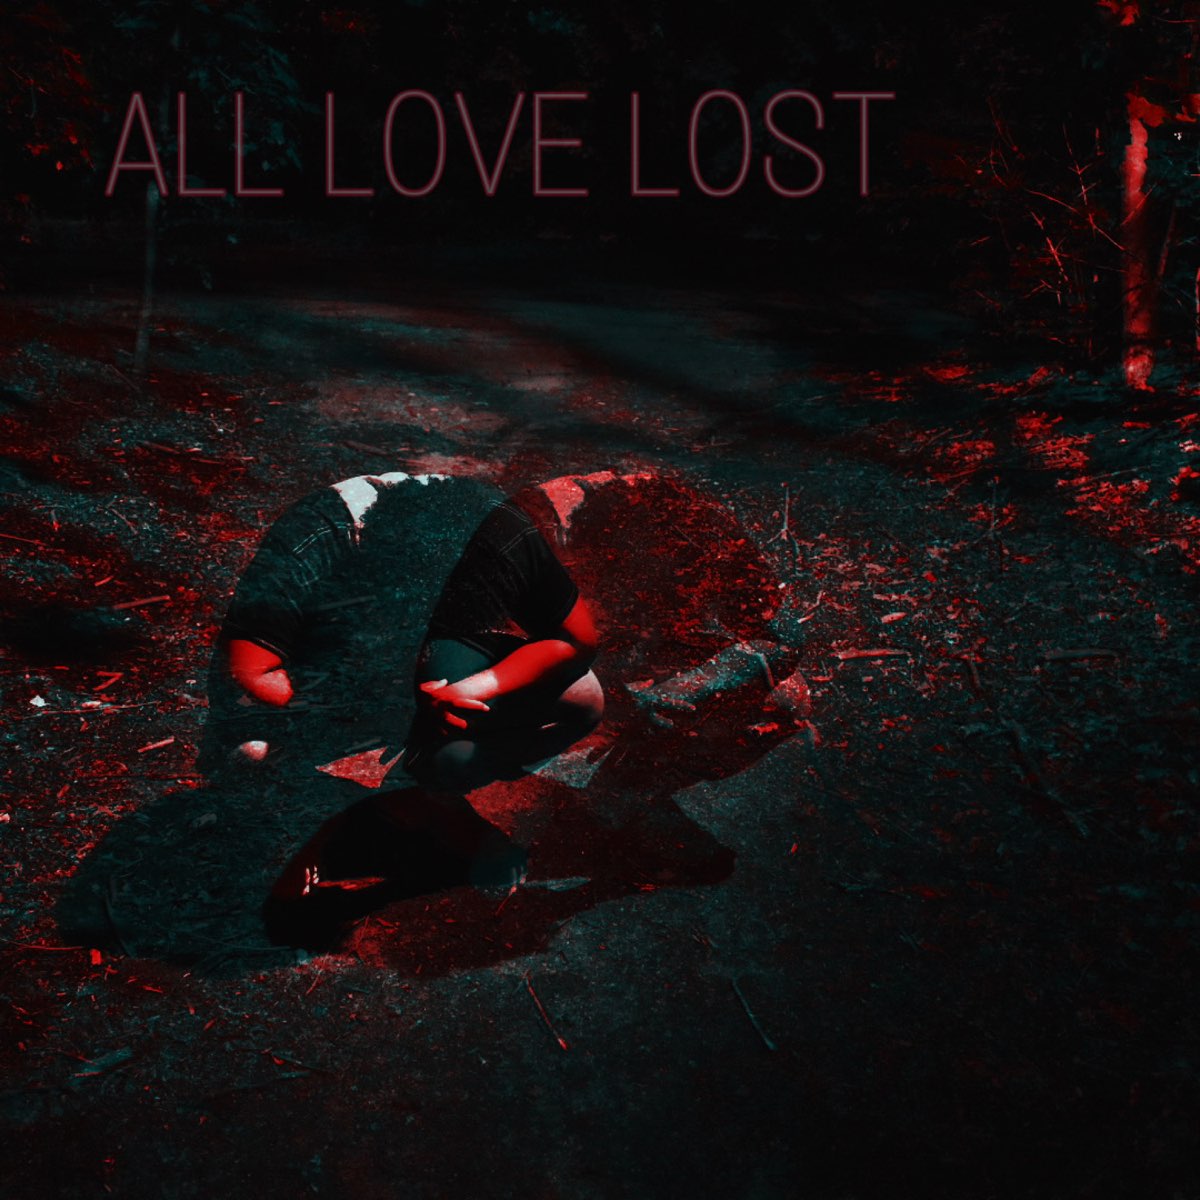 ‎All Love Lost - Album by SAGA - Apple Music